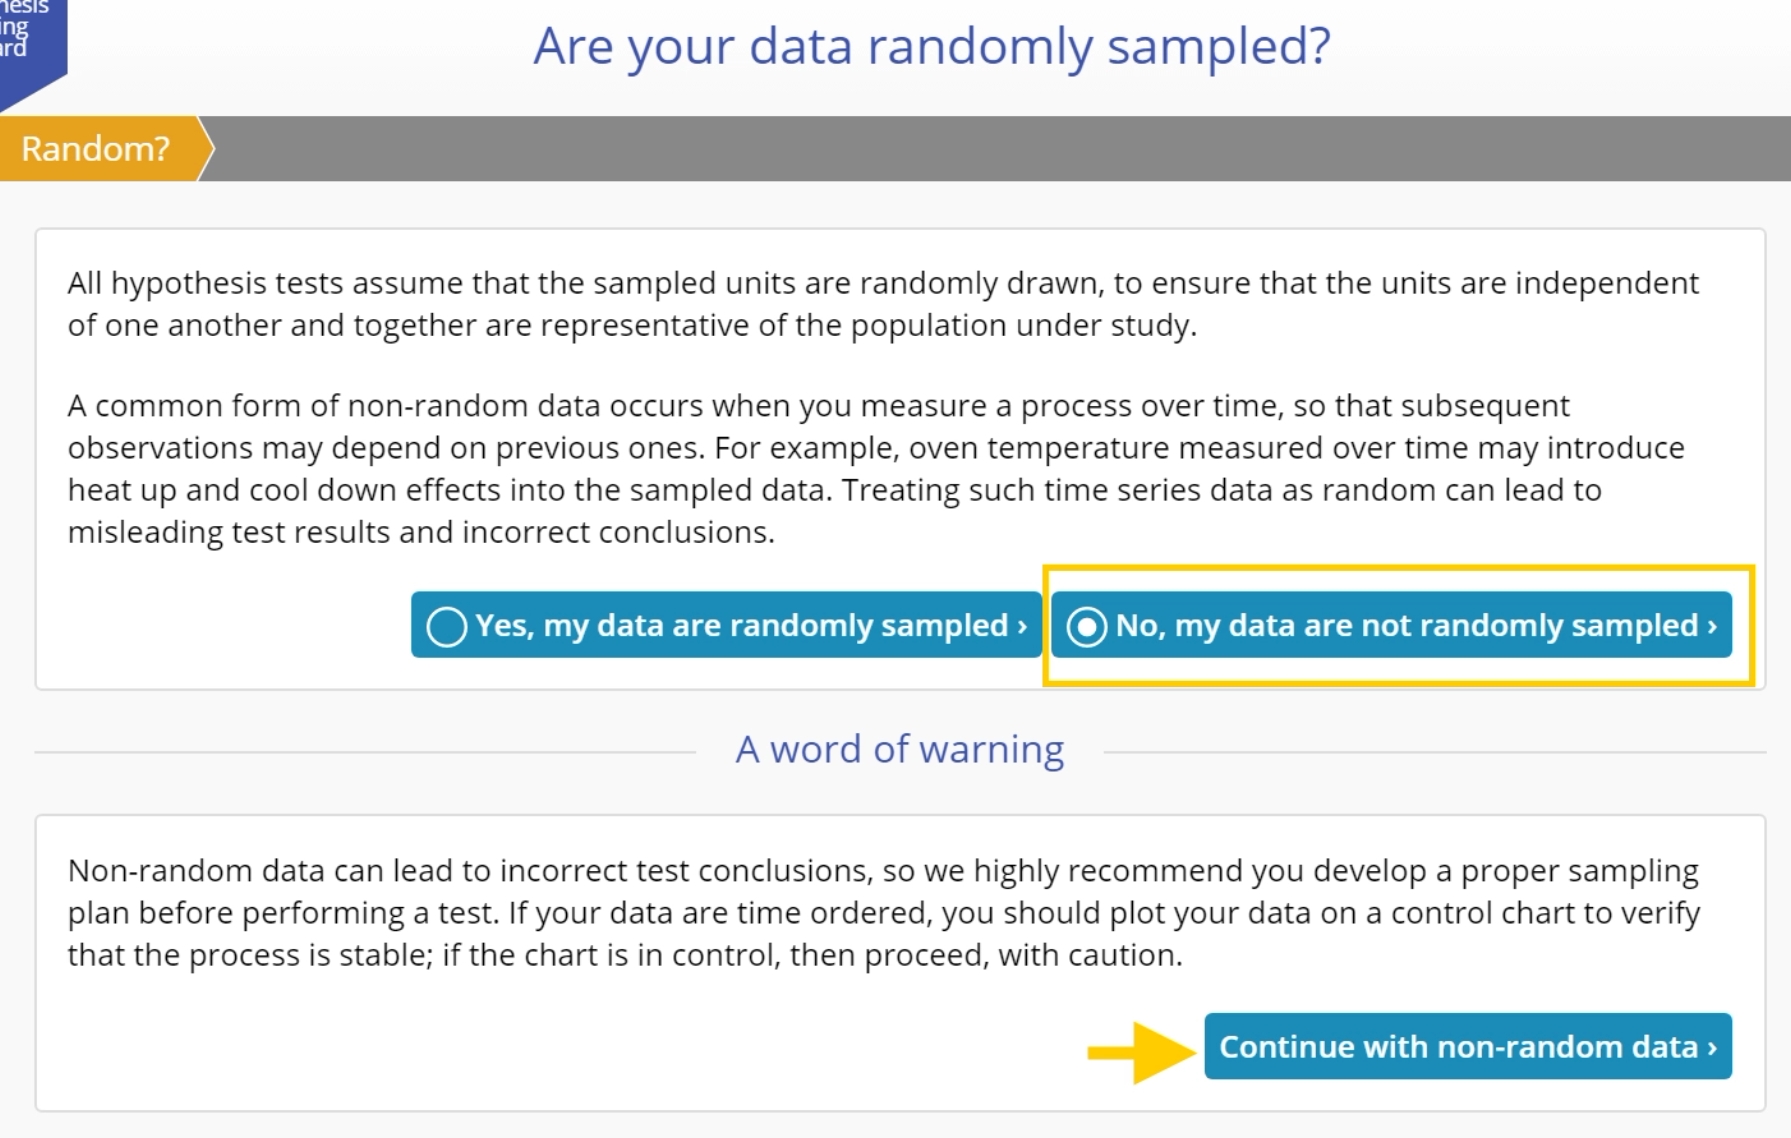 Menu asking if data is randomly sampled with "No" option selected.